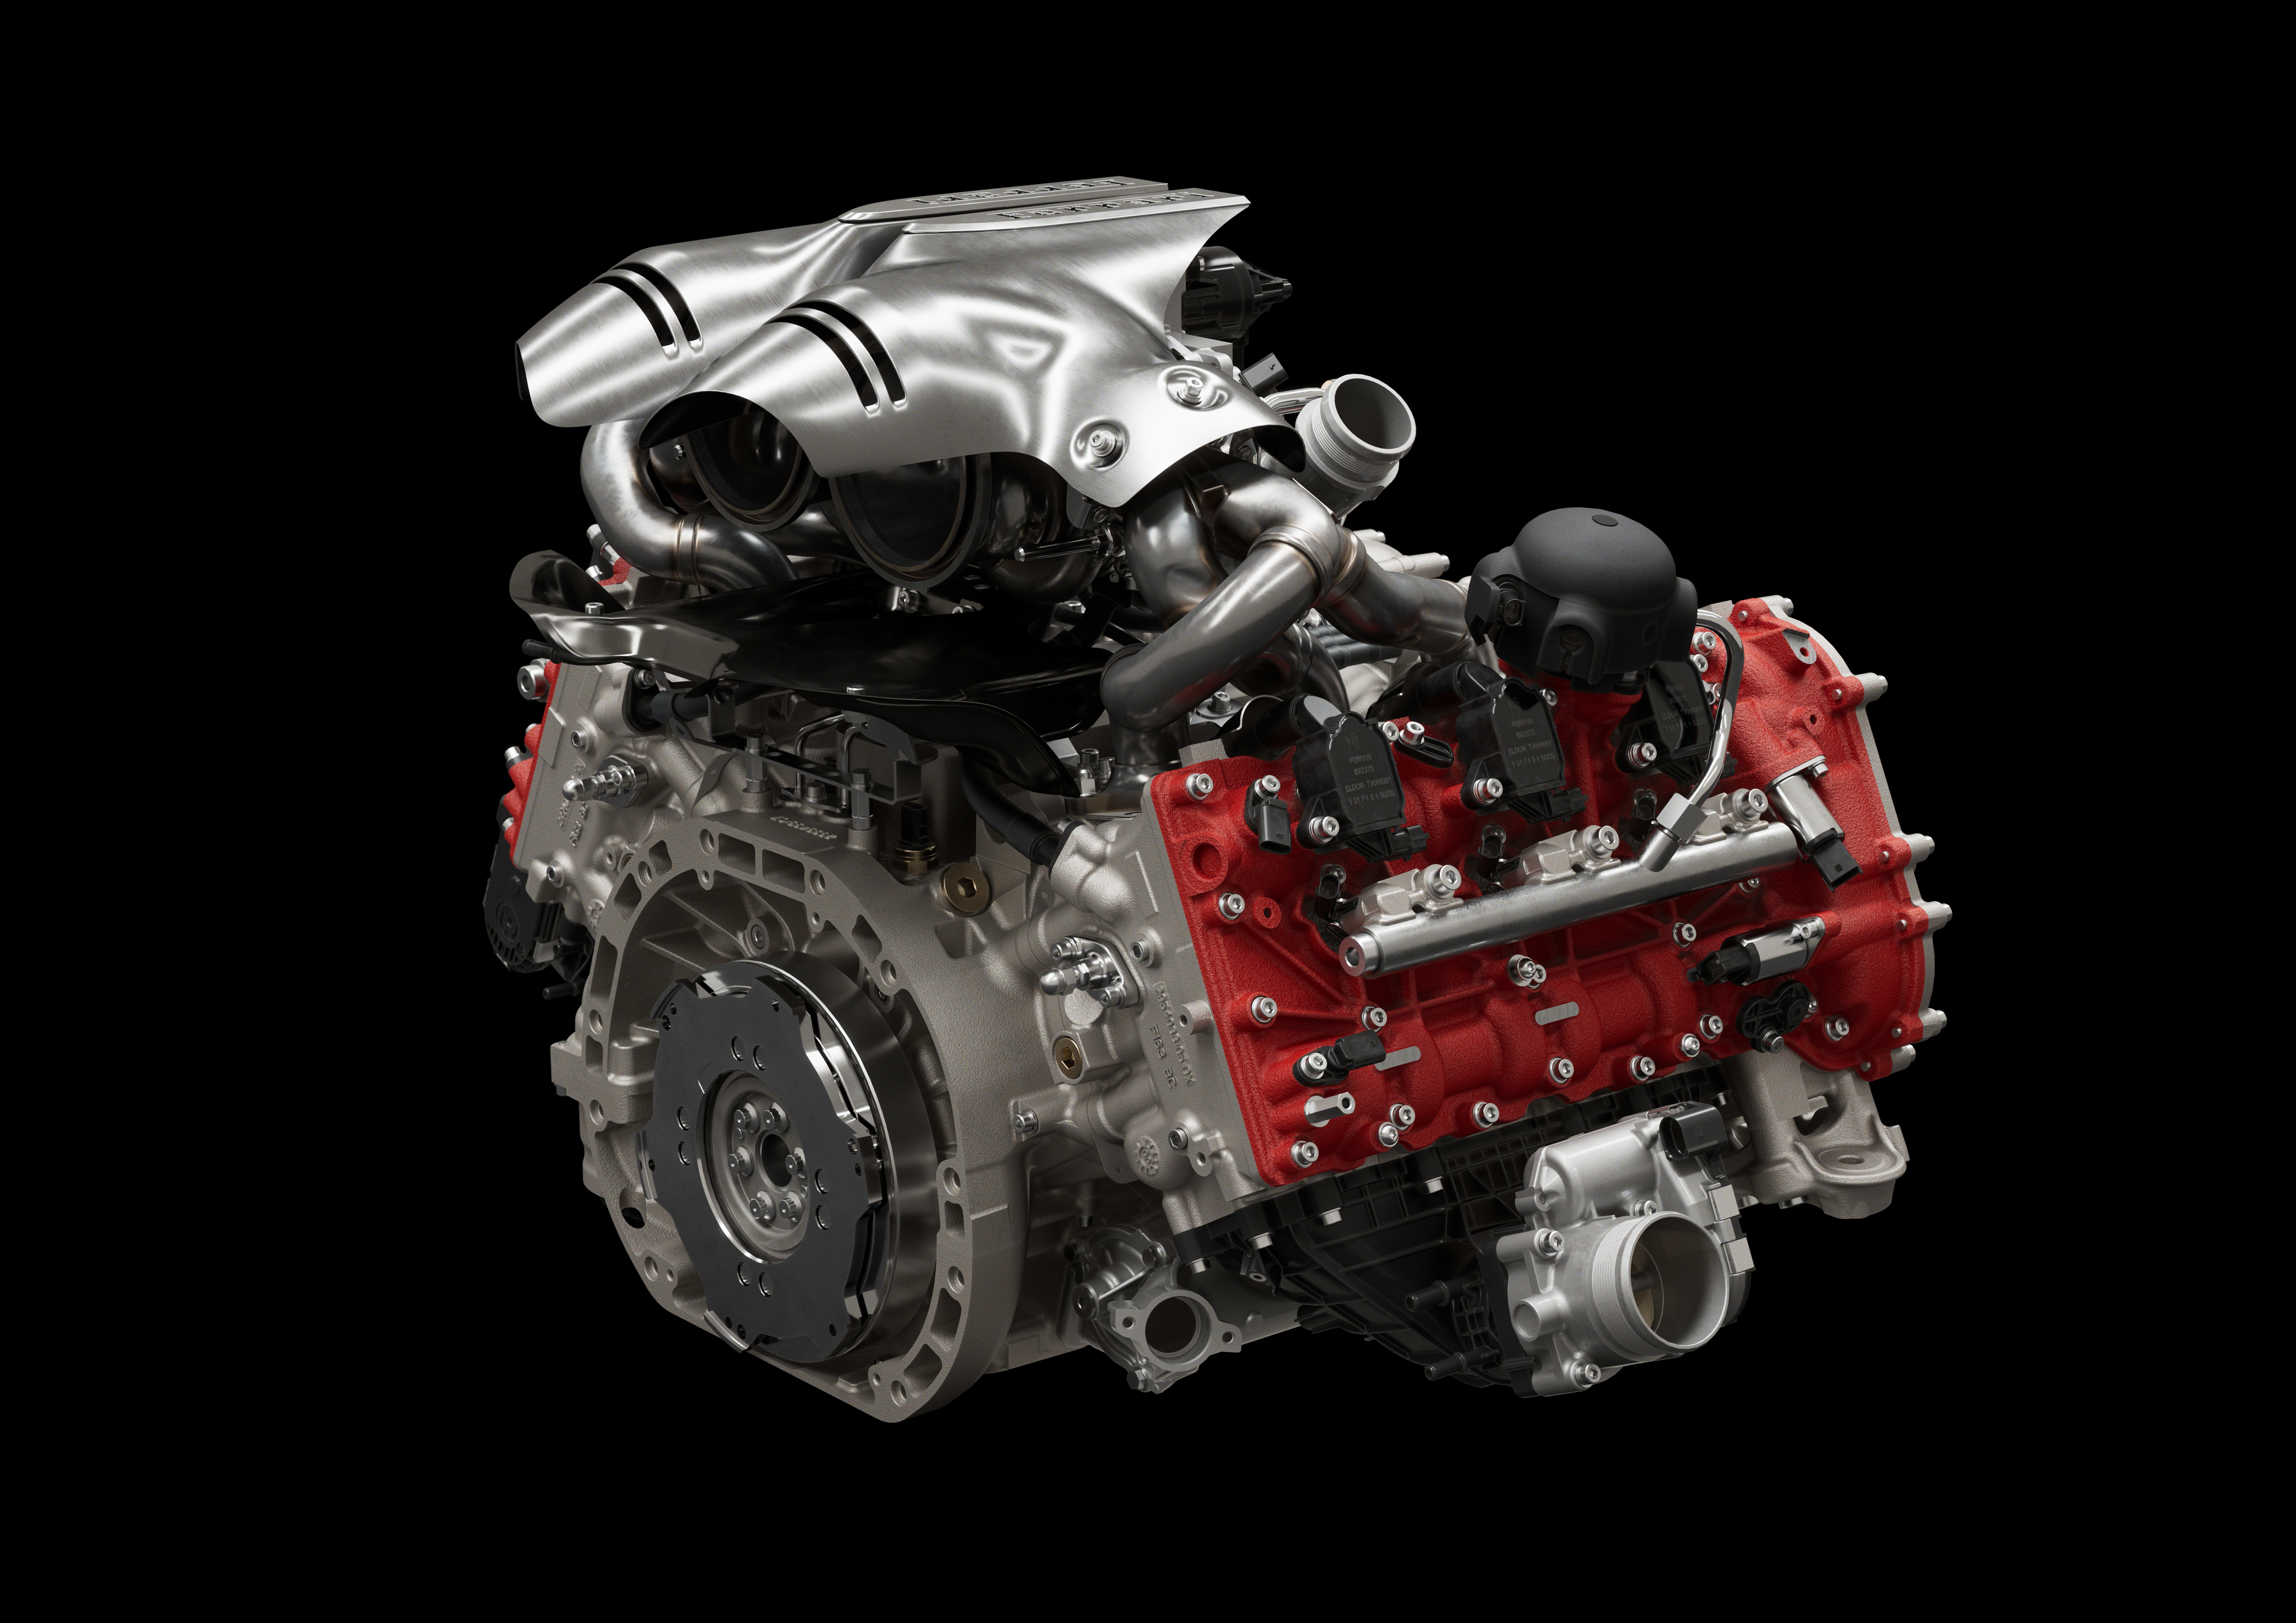 Ferrari unveils new V6 hybrid 296 GTB